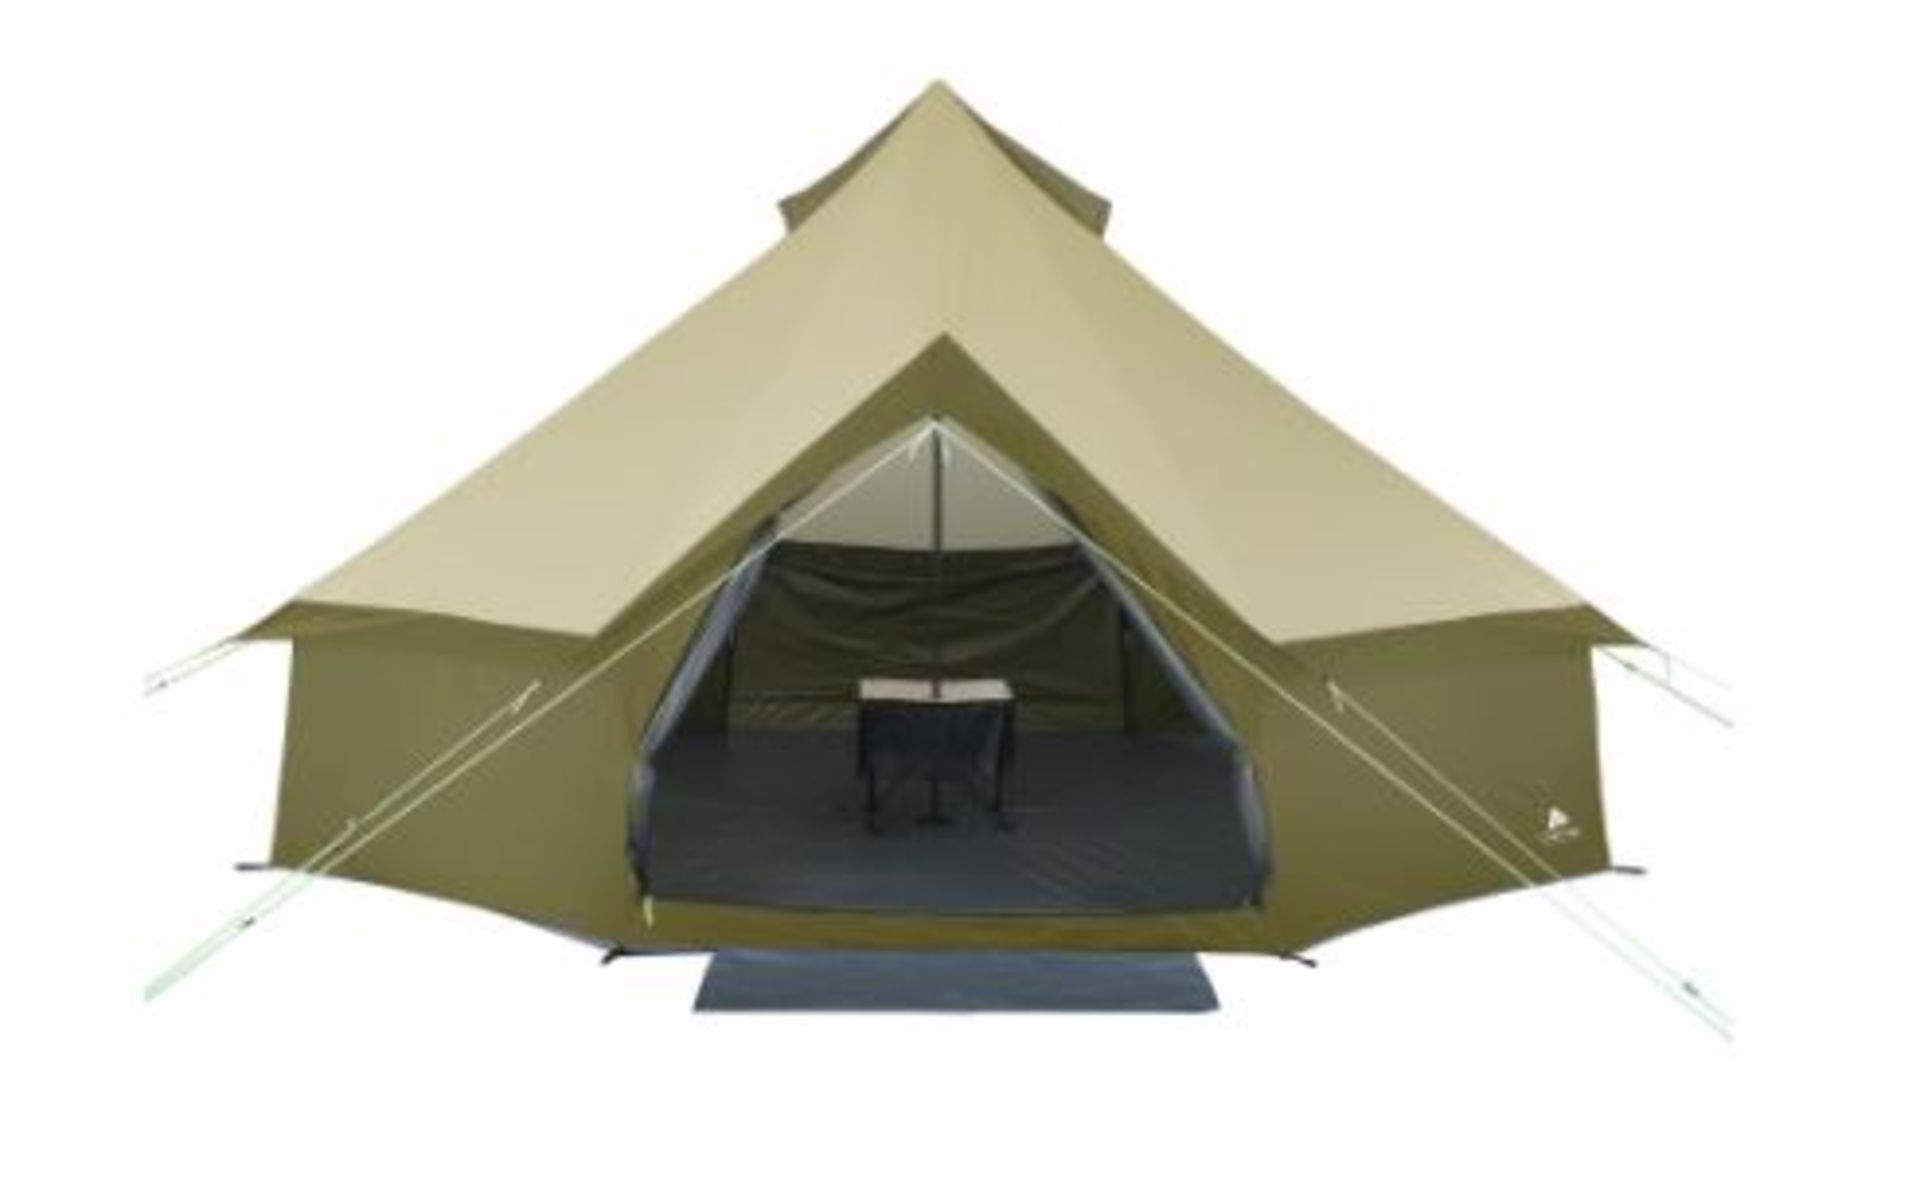 (R5M) 1x Ozark Trail 8 Person Yurt Tent RRP £149 - Image 2 of 4